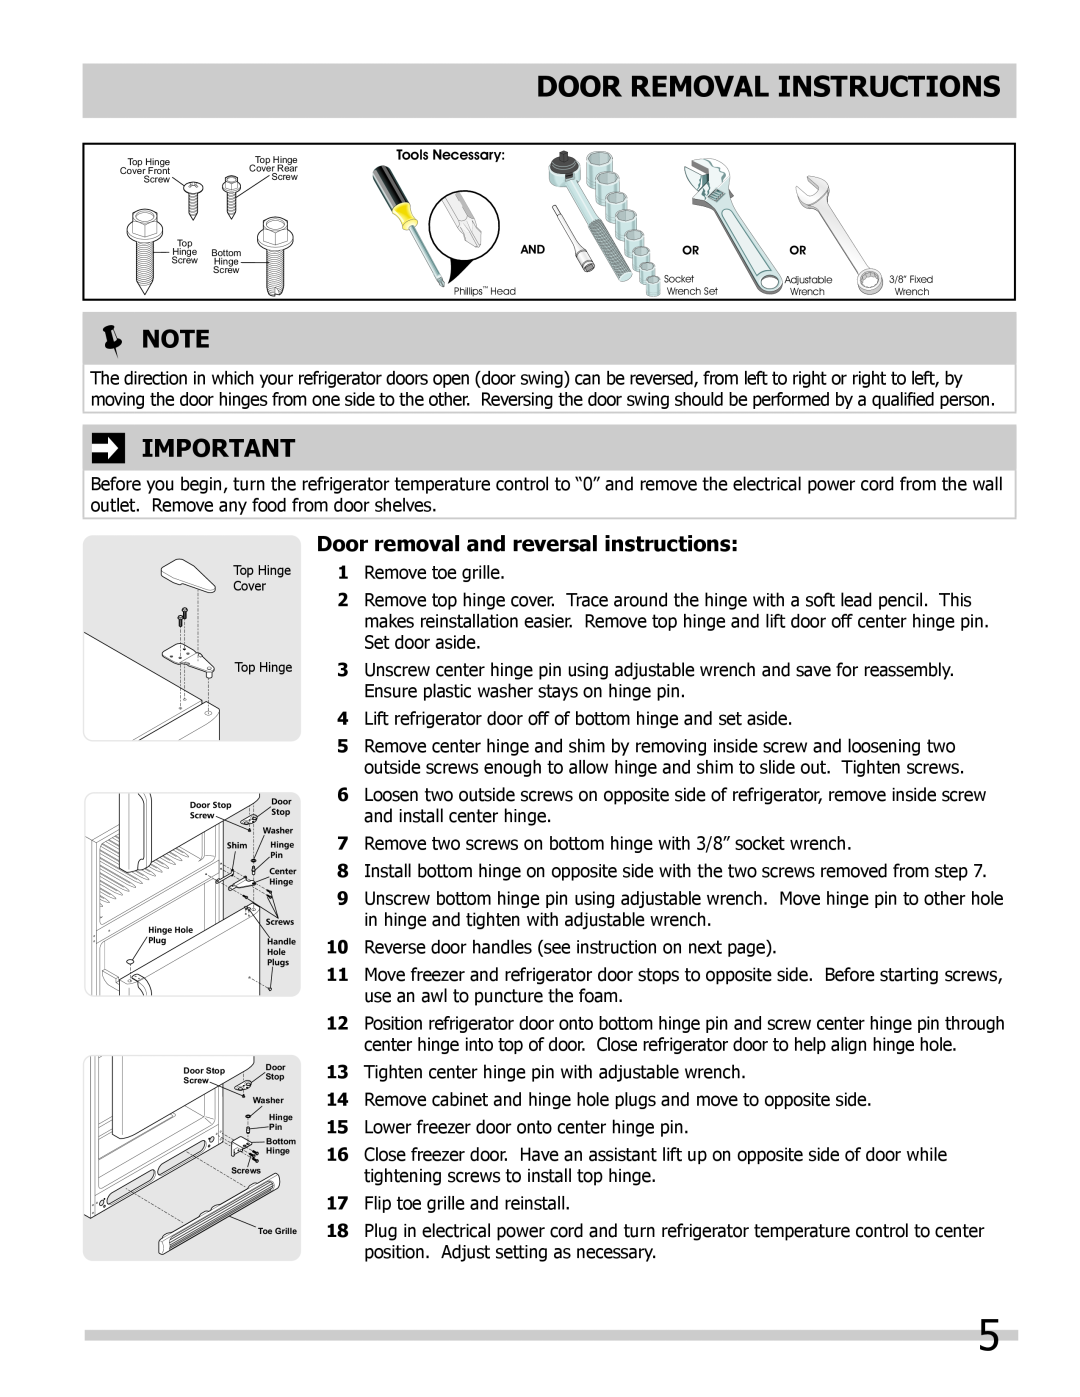 Frigidaire 242008000 manual Door Removal Instructions, Door removal and reversal instructions,  Note 